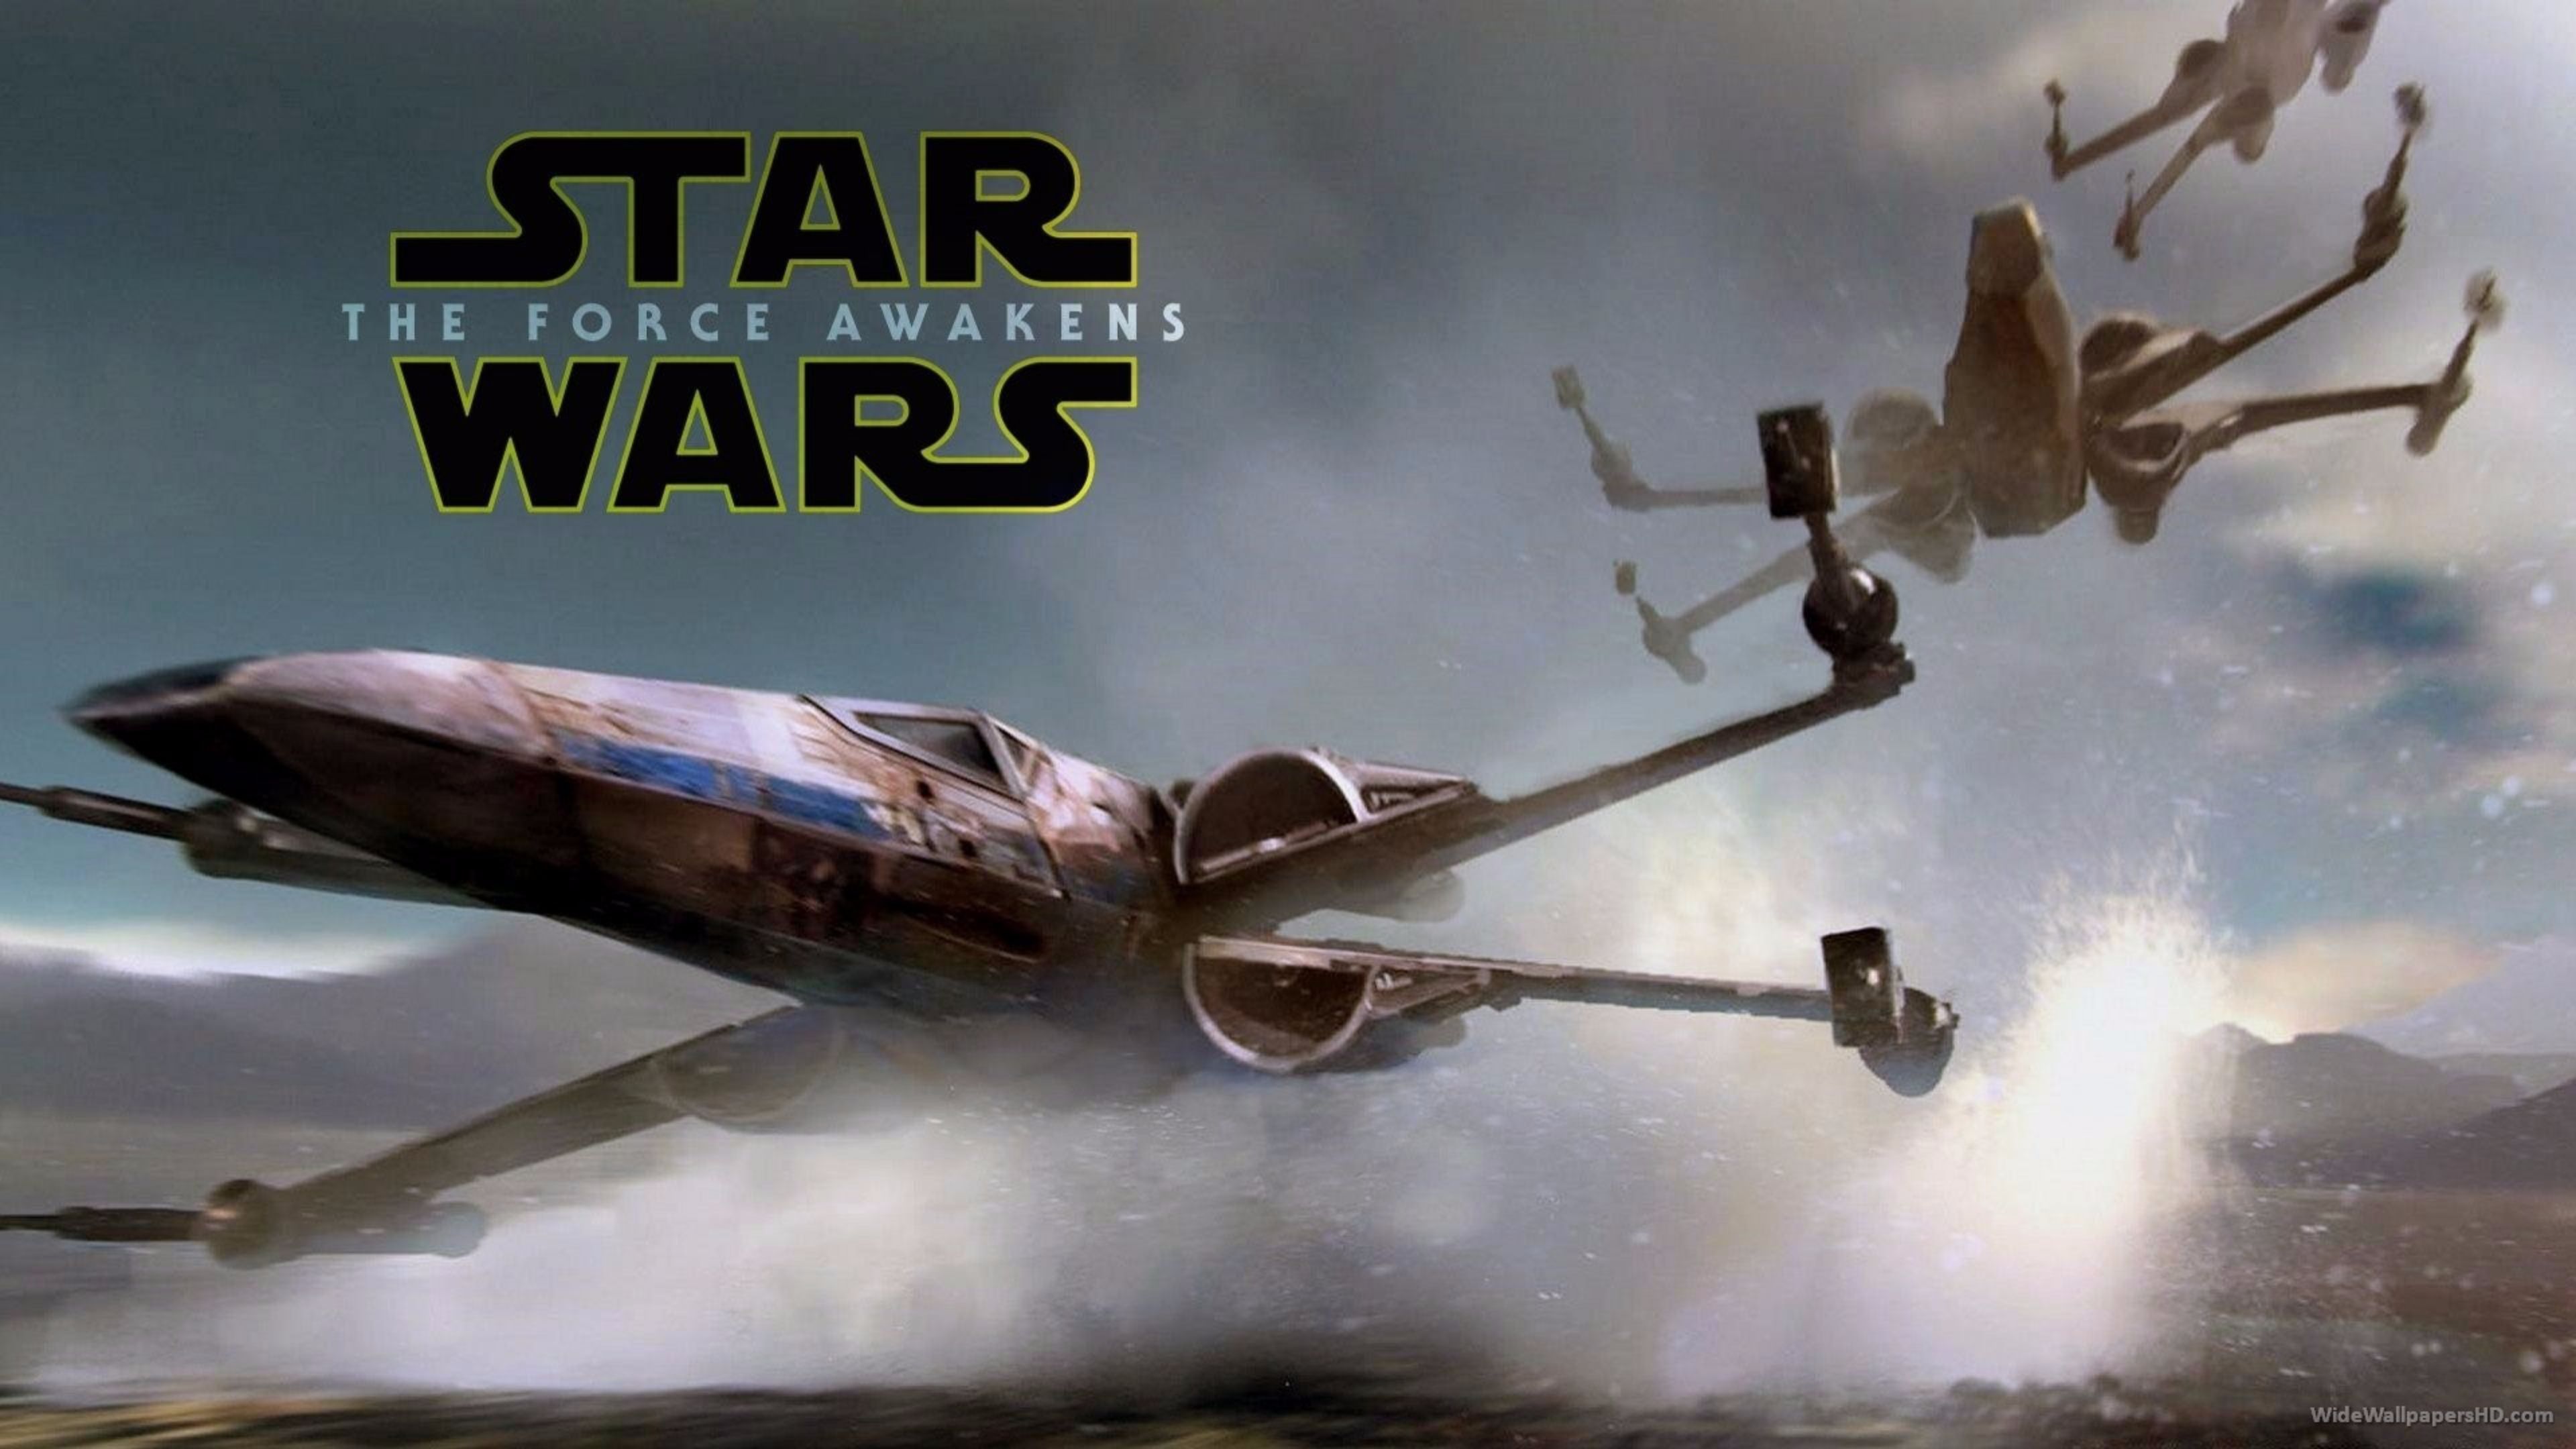  Free Star Wars The Force Awakens 4K Wallpaper Free 4K Wallpaper